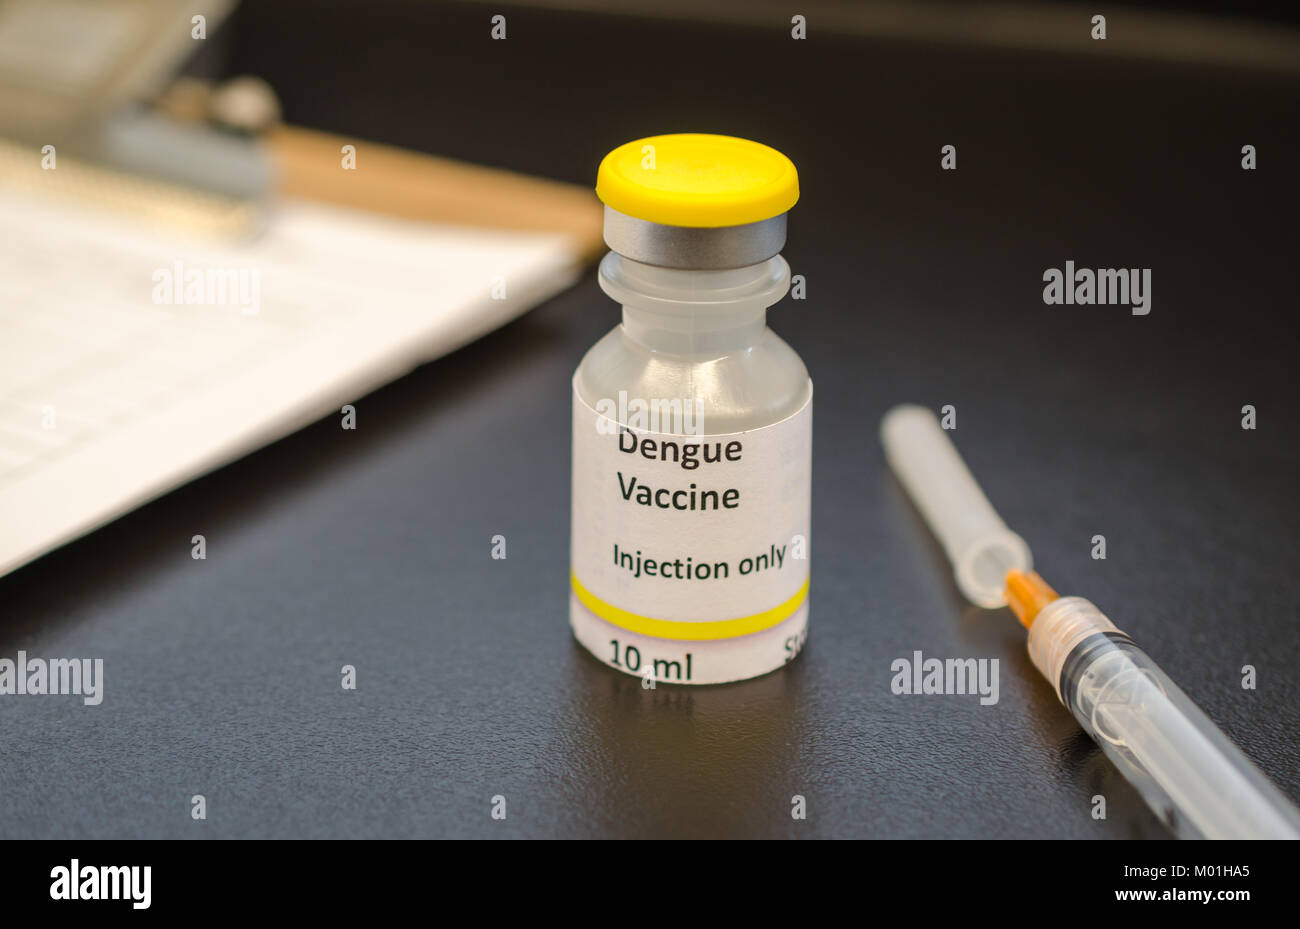 Dengue virus vaccine vial with syringe Stock Photo